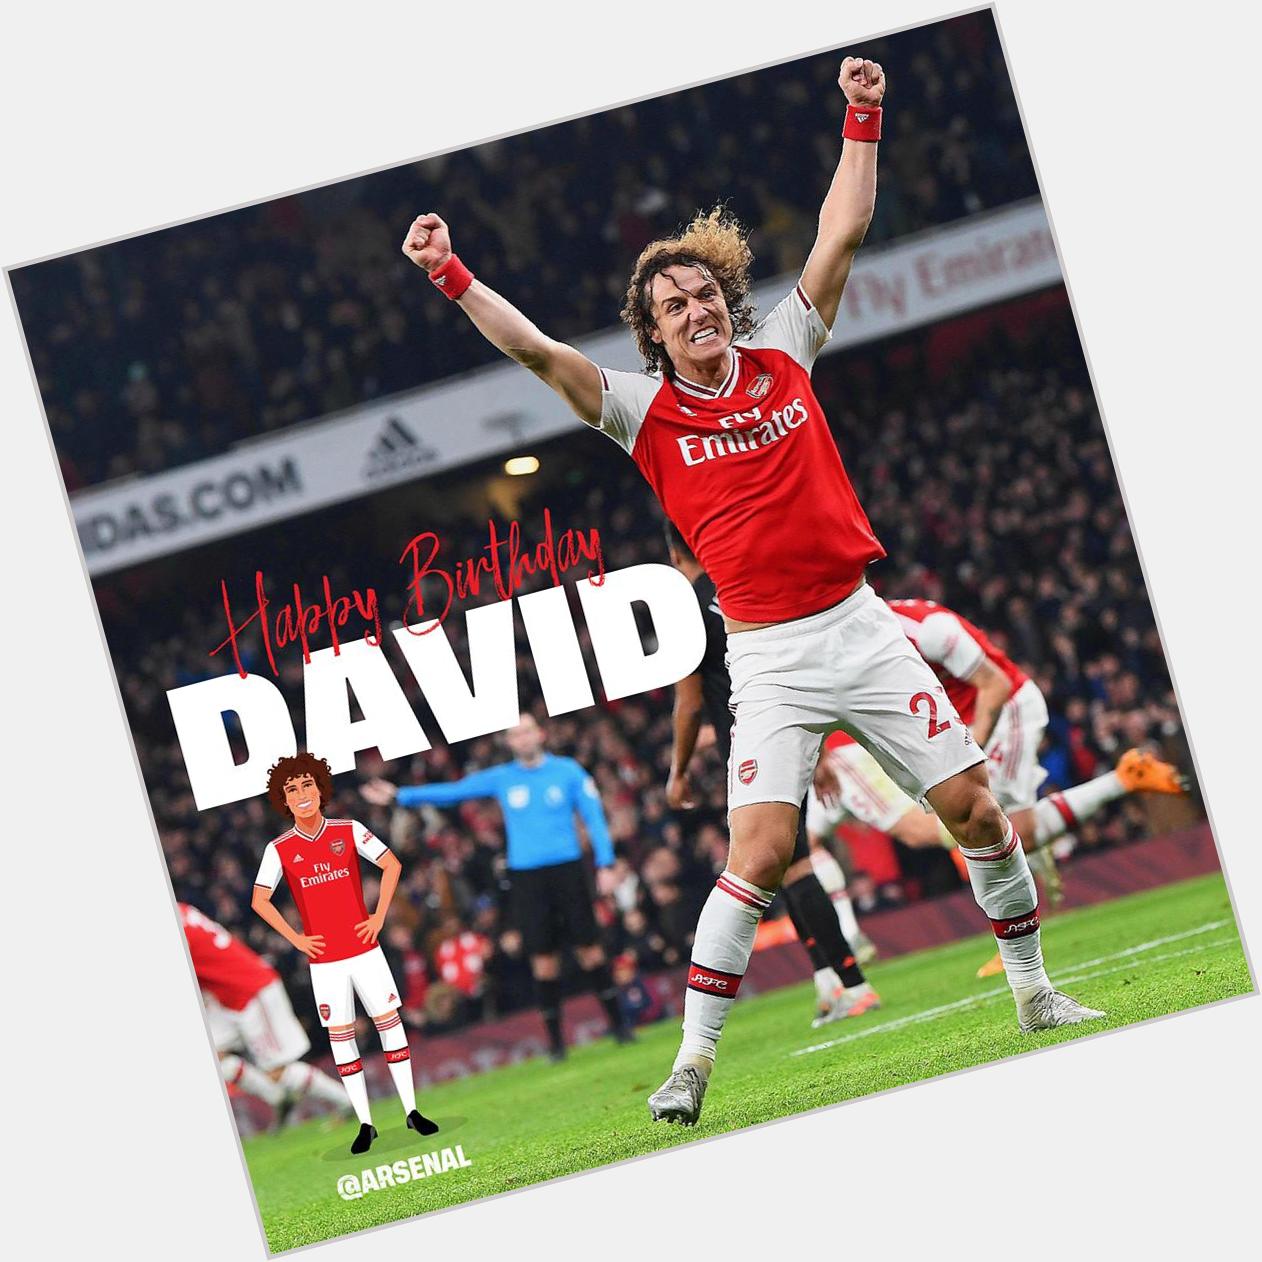 Undoubtedly a great addition to Arsenal\s defense. Happy birthday David Luiz 